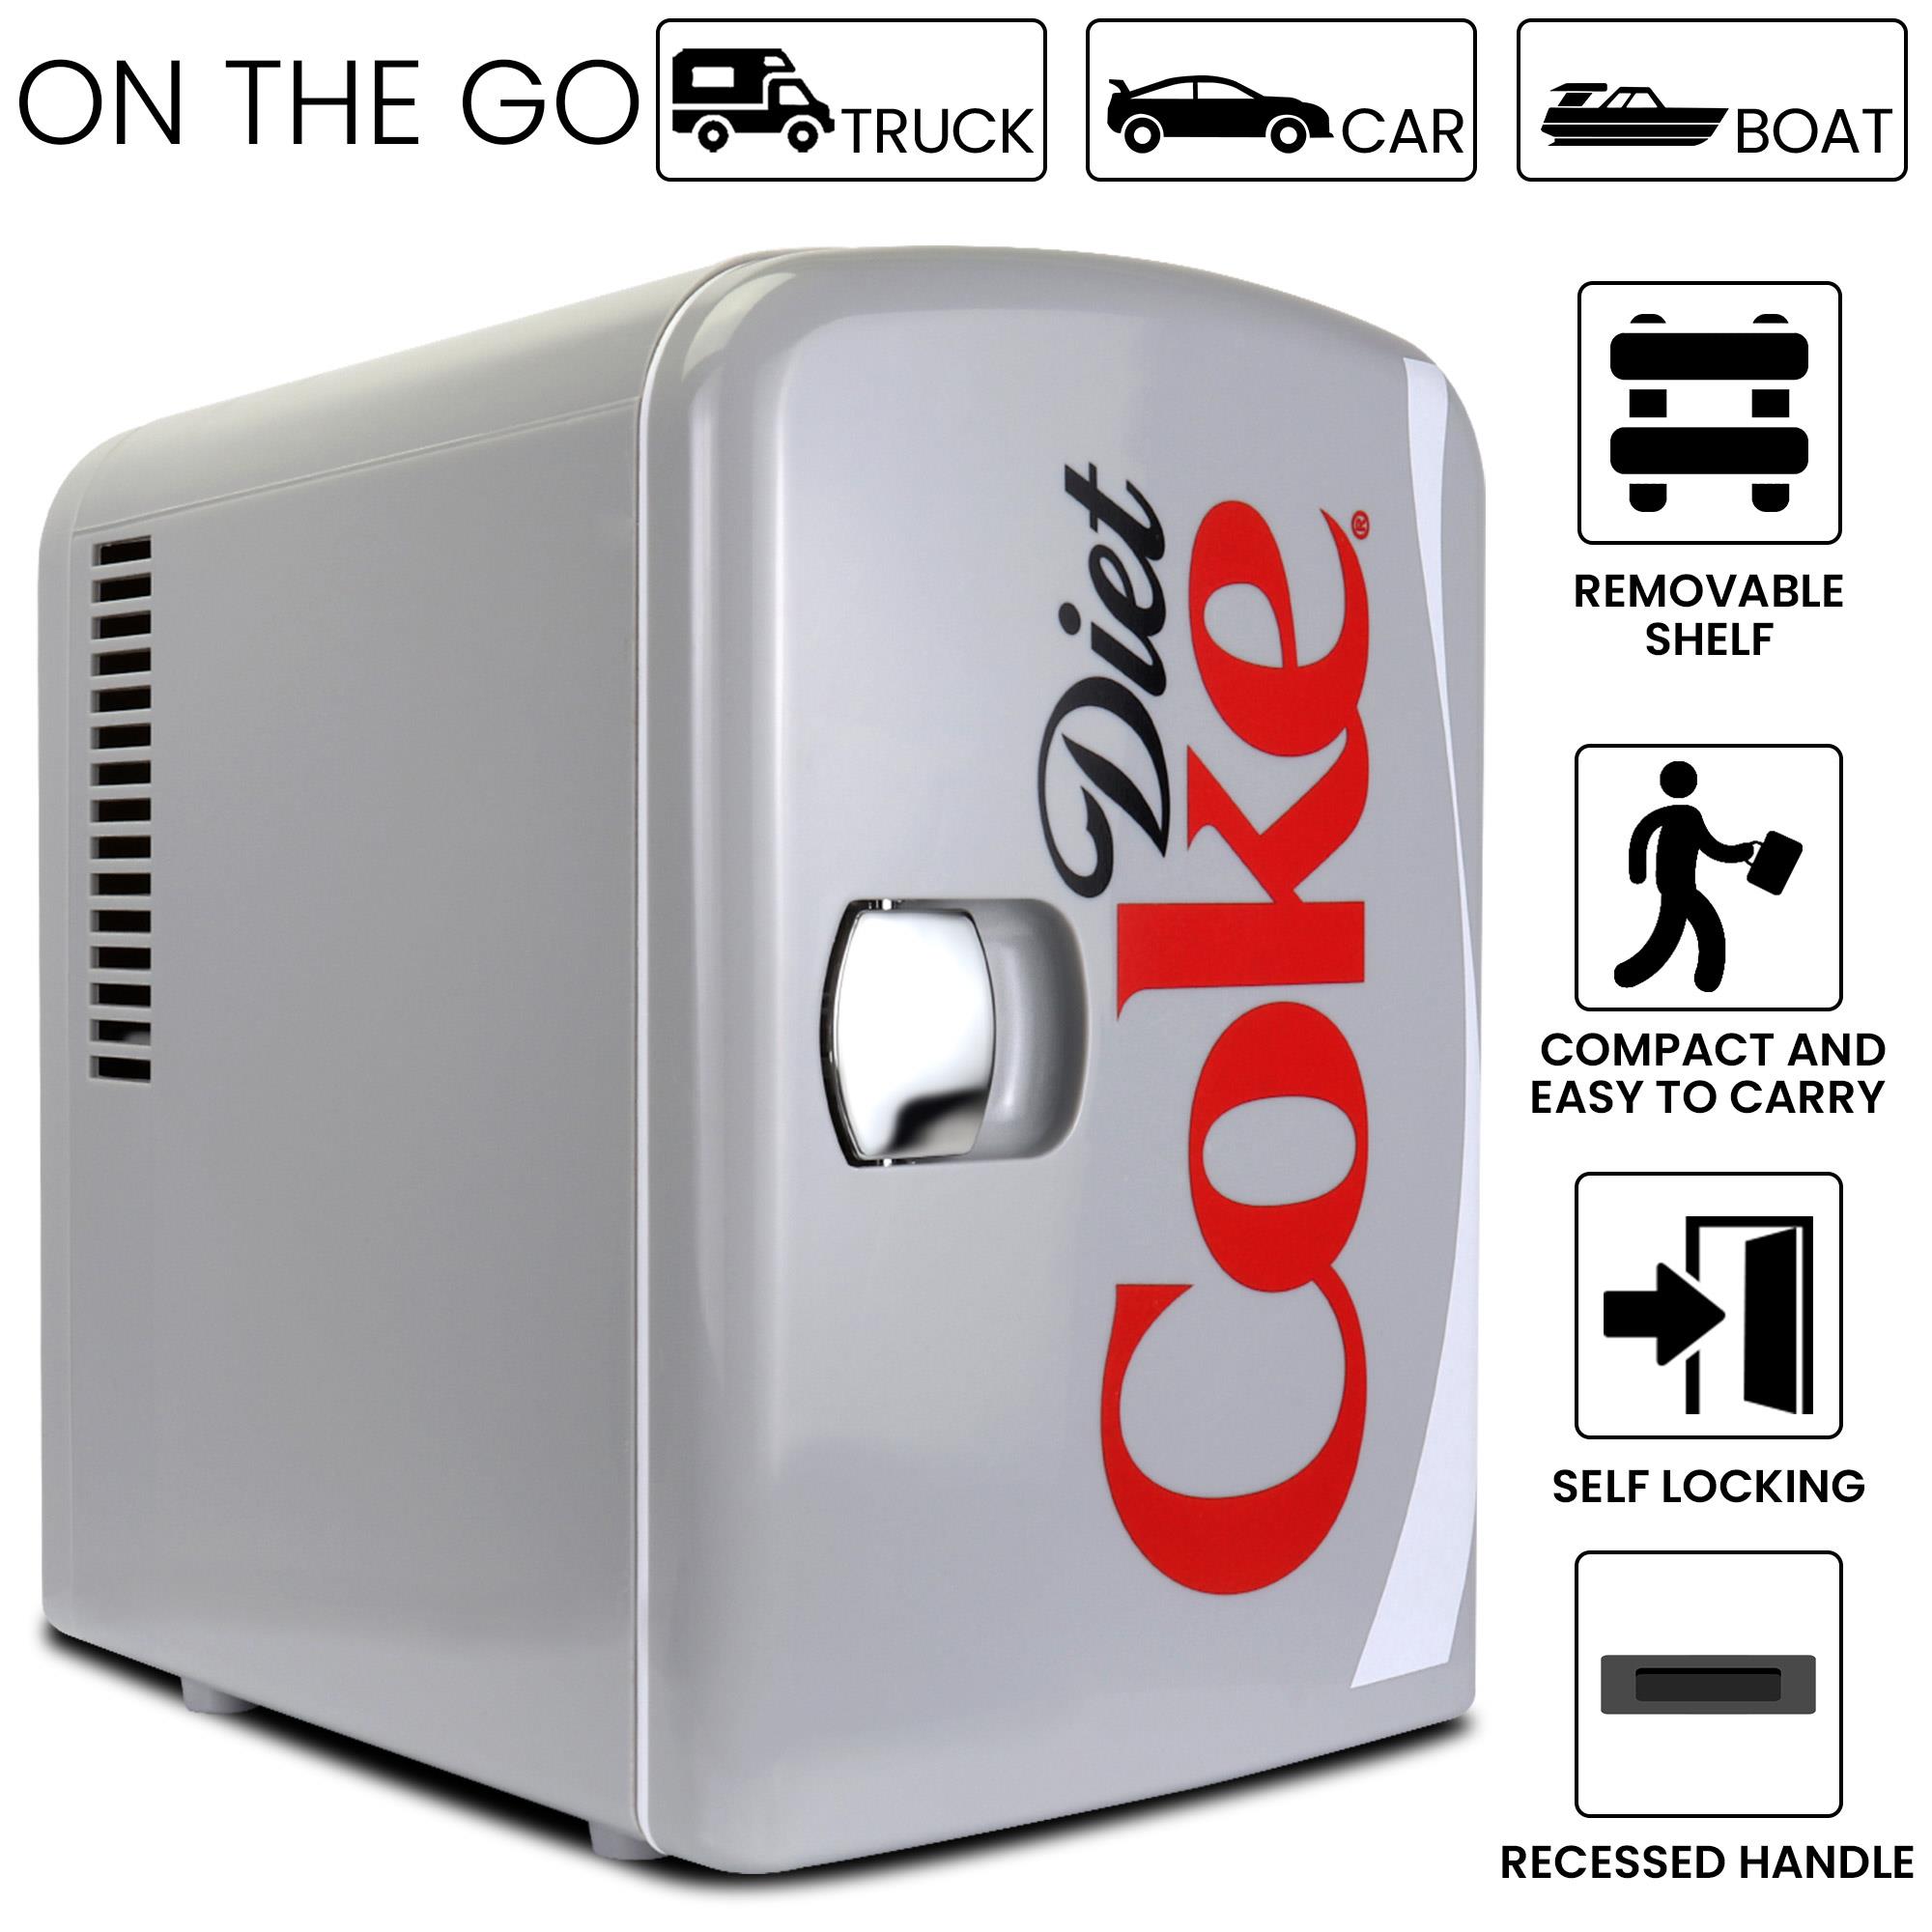 Coca Cola Polar Bear Mini Fridge